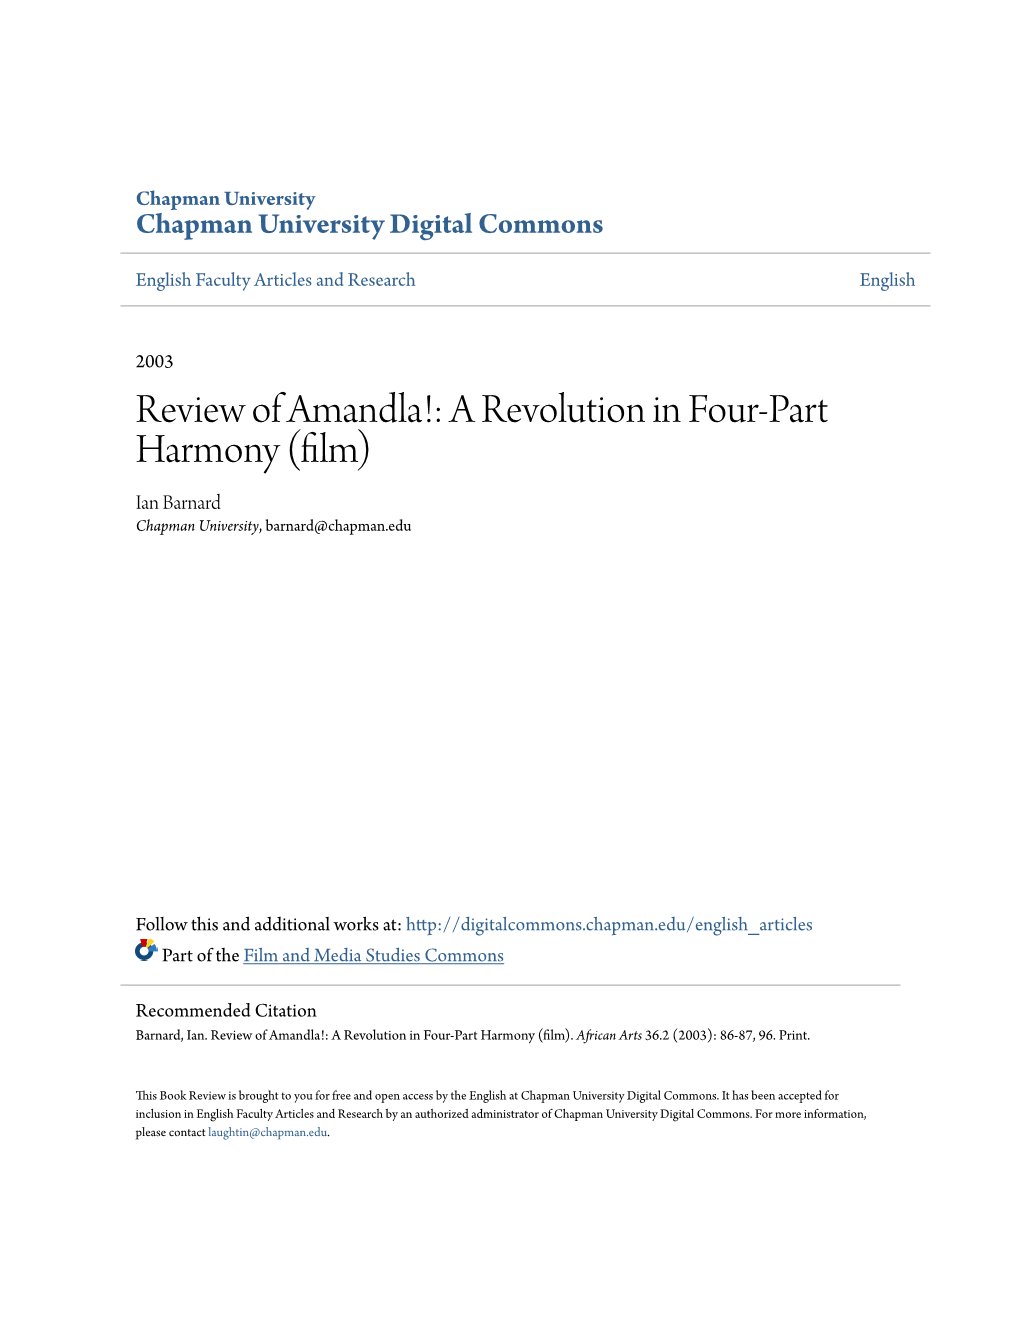 Review of Amandla!: a Revolution in Four-Part Harmony (Film) Ian Barnard Chapman University, Barnard@Chapman.Edu